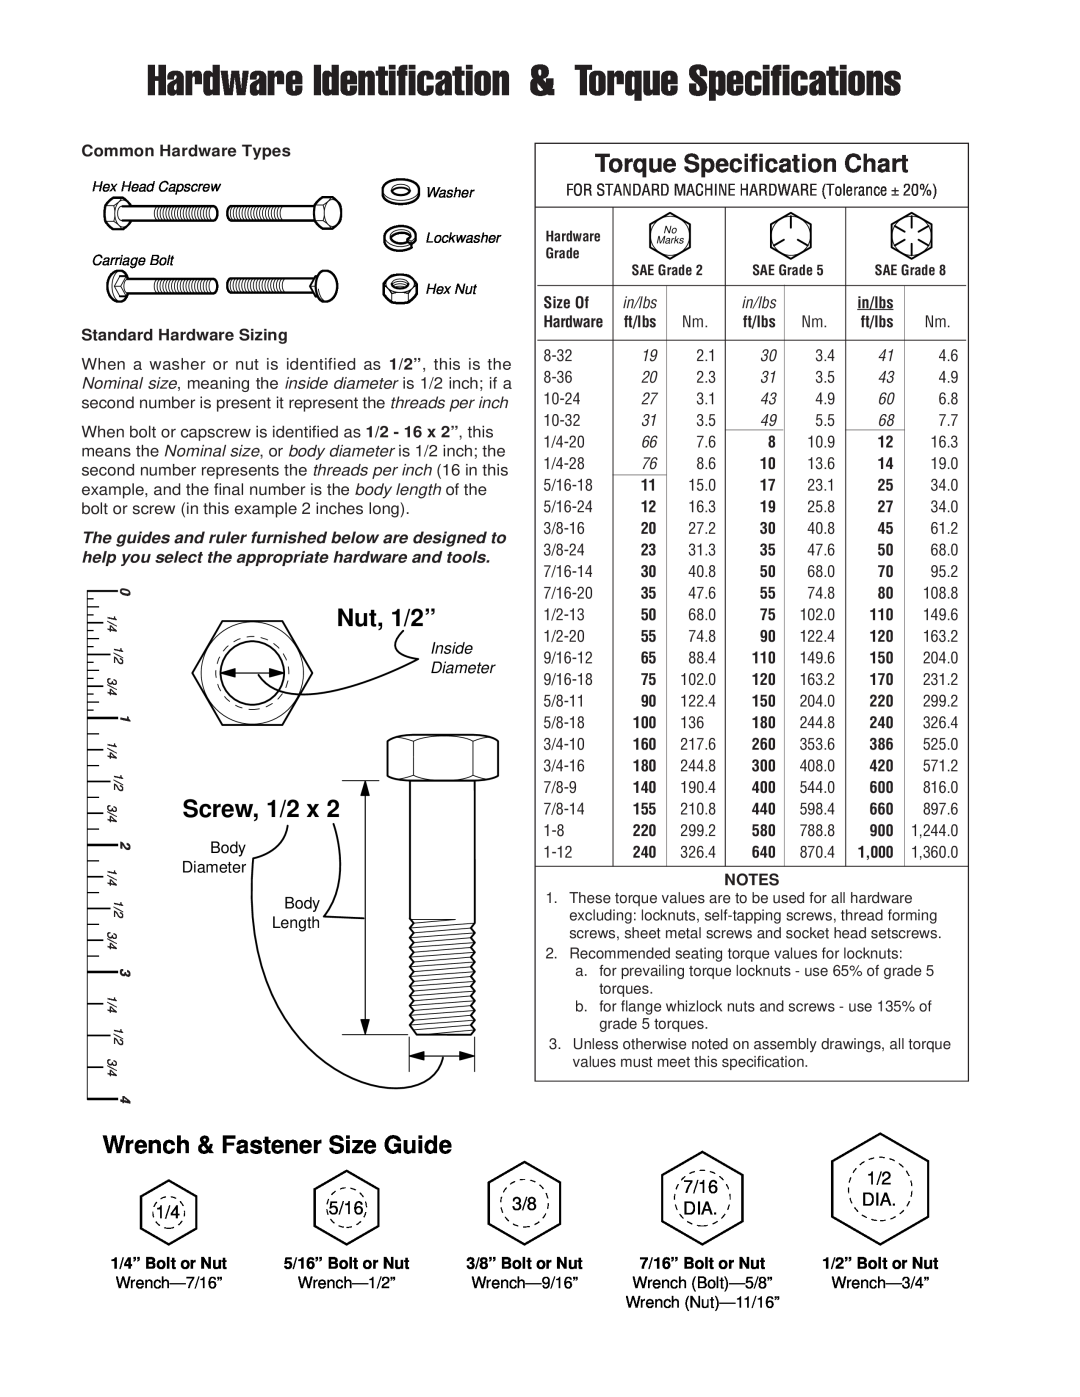 Simplicity 1694153 Hardware Identification & Torque Specifications, Torque Specification Chart, Nut, 1/2”, Screw, 1/2 